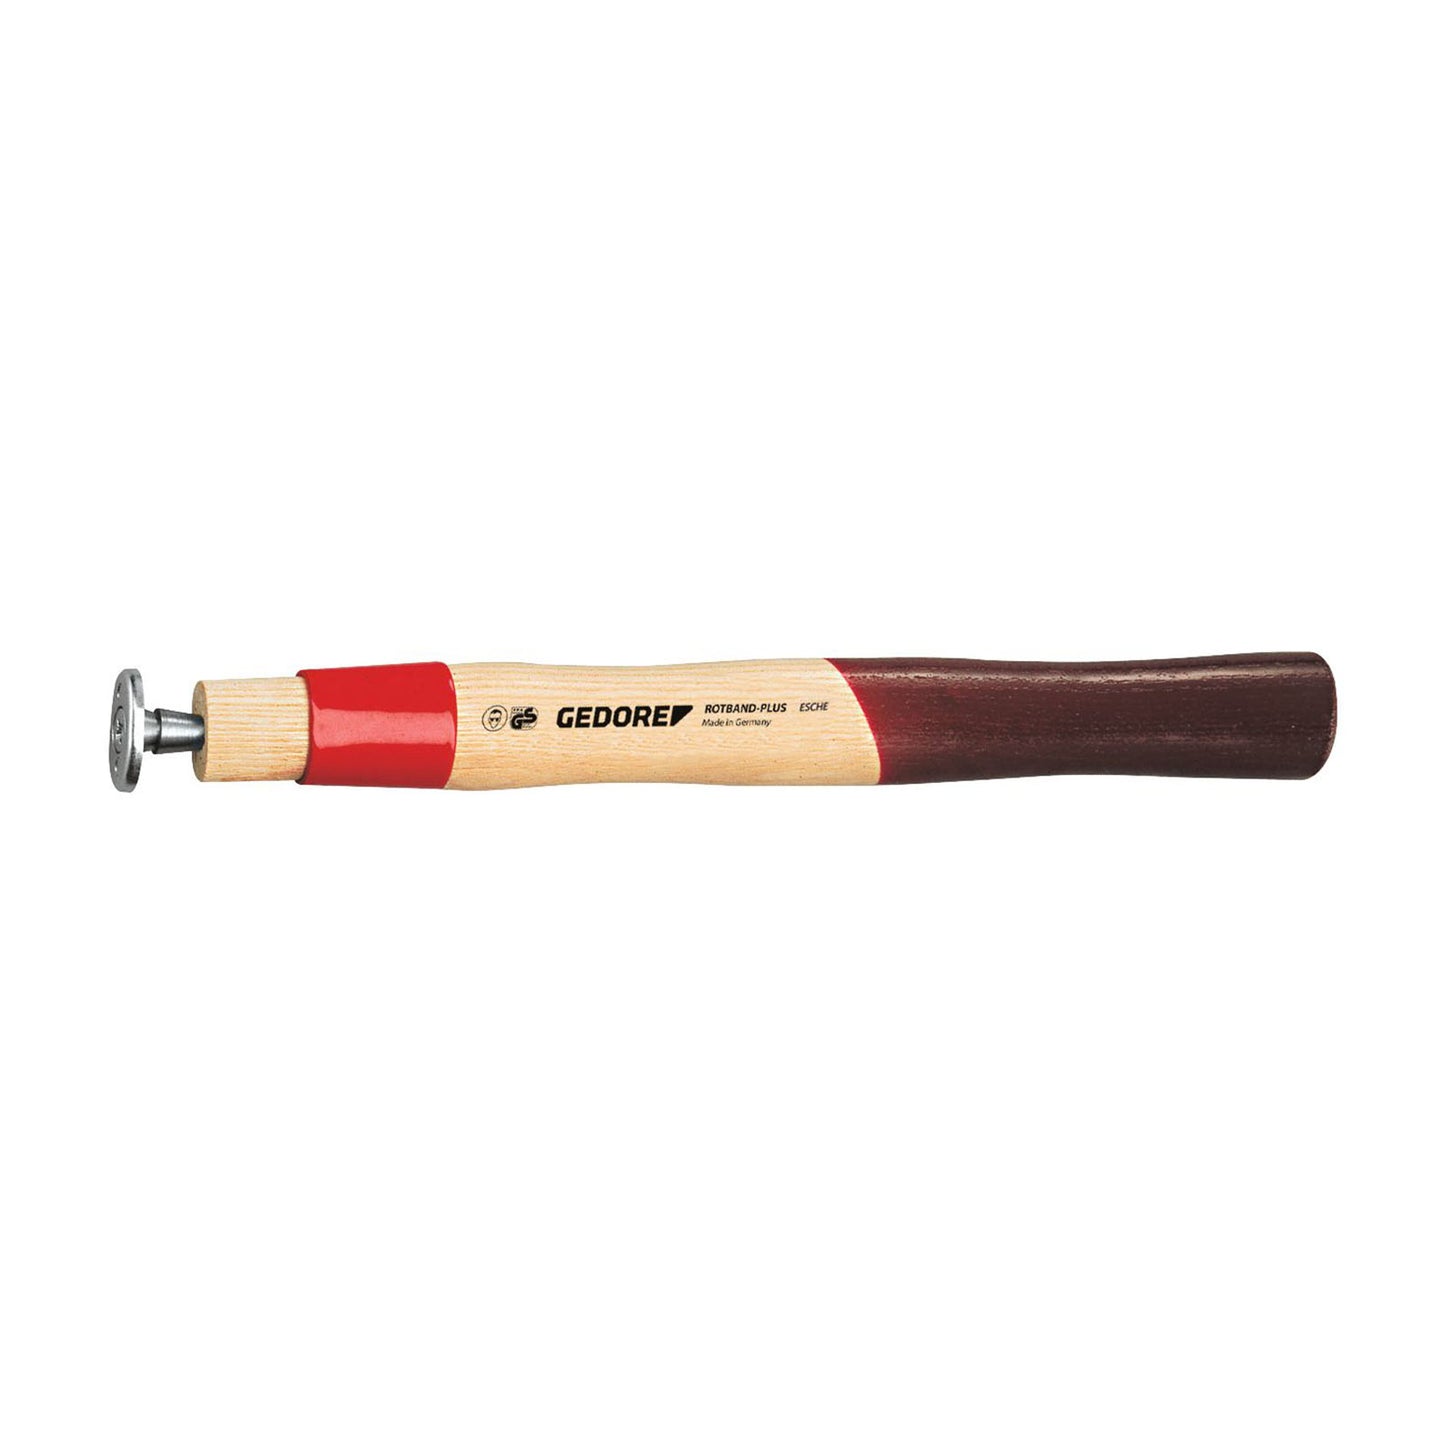 GEDORE E-620 H-1500 - ROTBAND walnut handle 28cm (8677480)